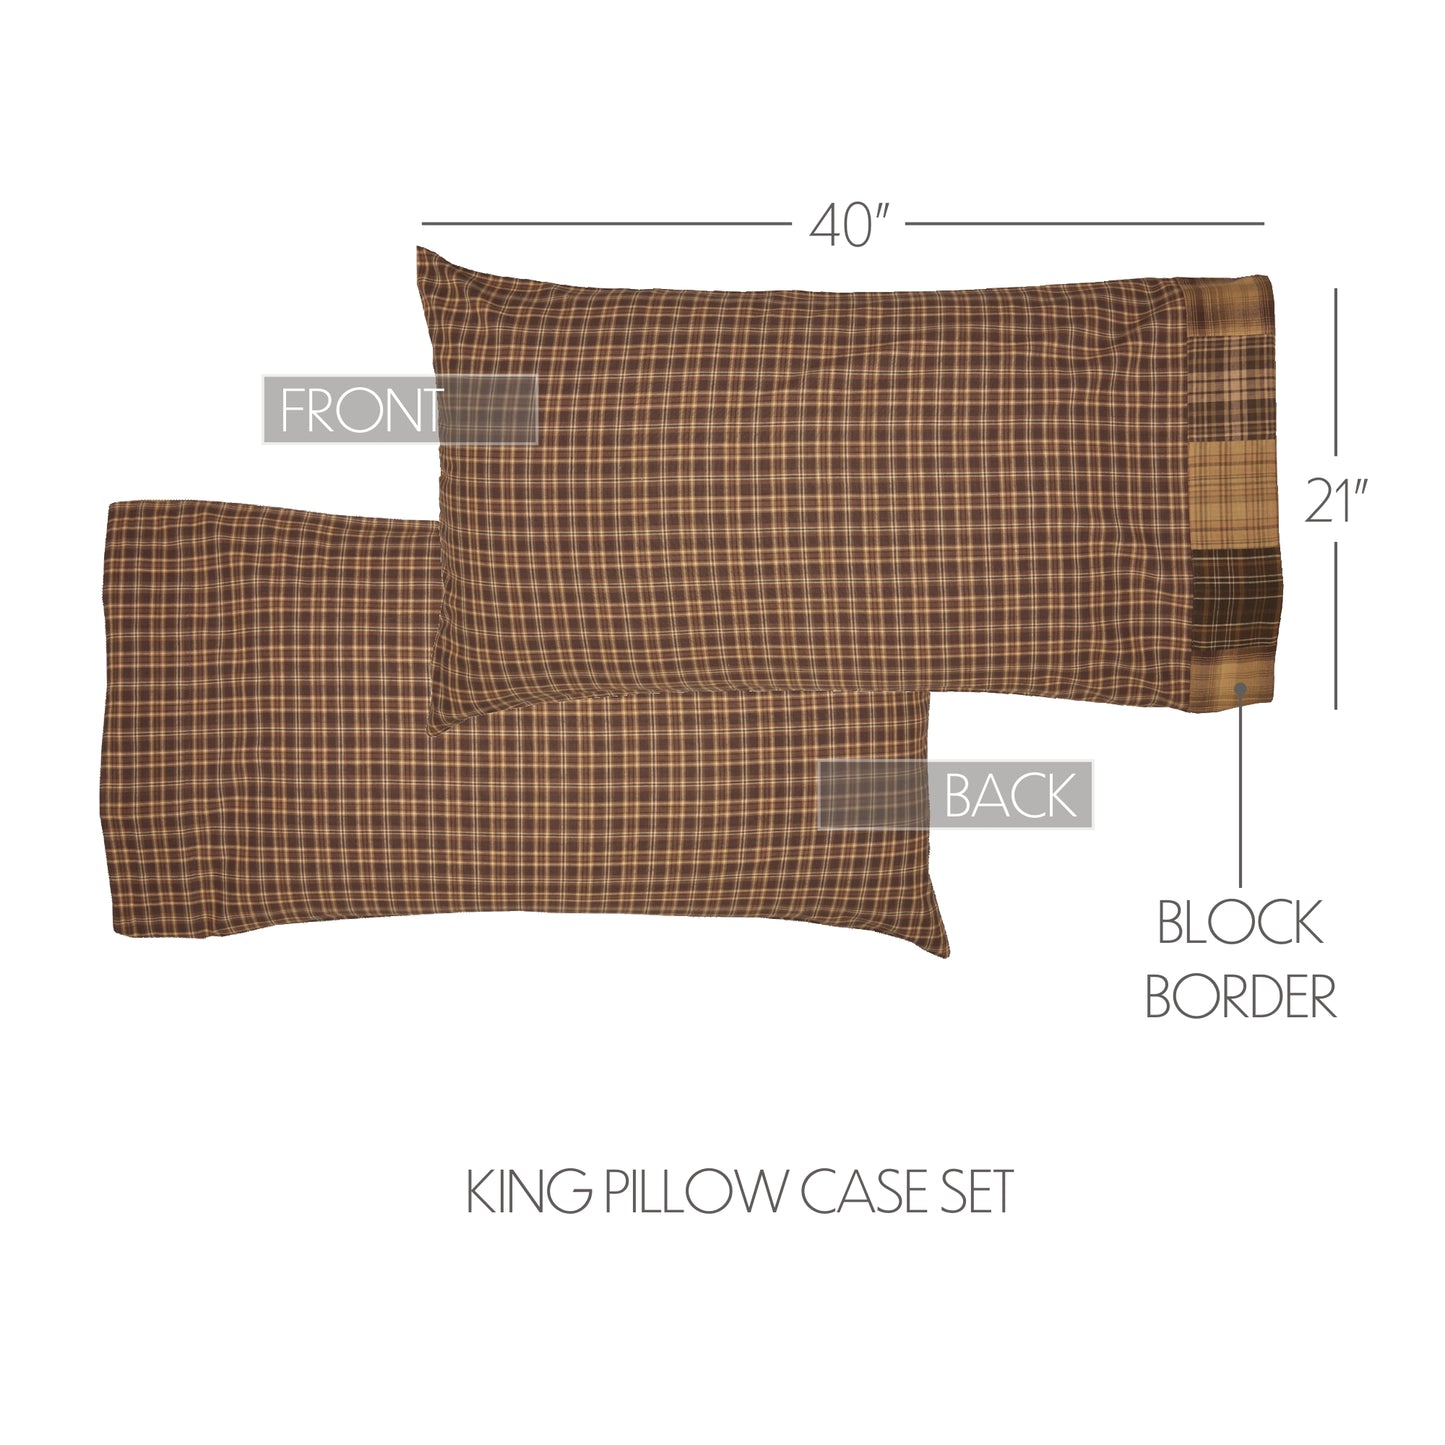 56750-Prescott-King-Pillow-Case-Block-Border-Set-of-2-21x40-image-1